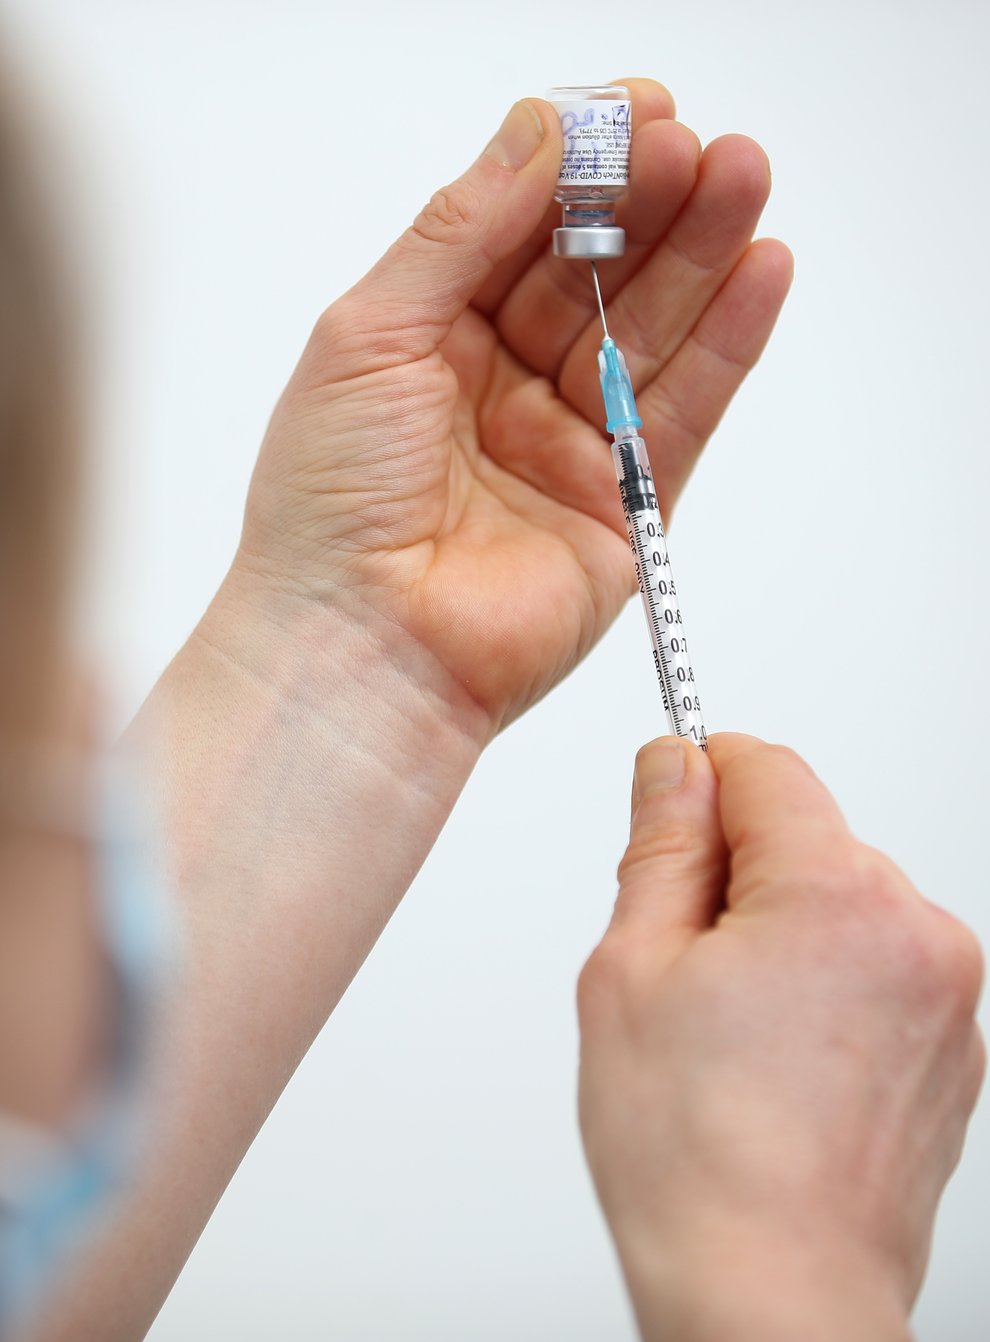 The Pfizer-BioNTech coronavirus vaccine is prepared for injection